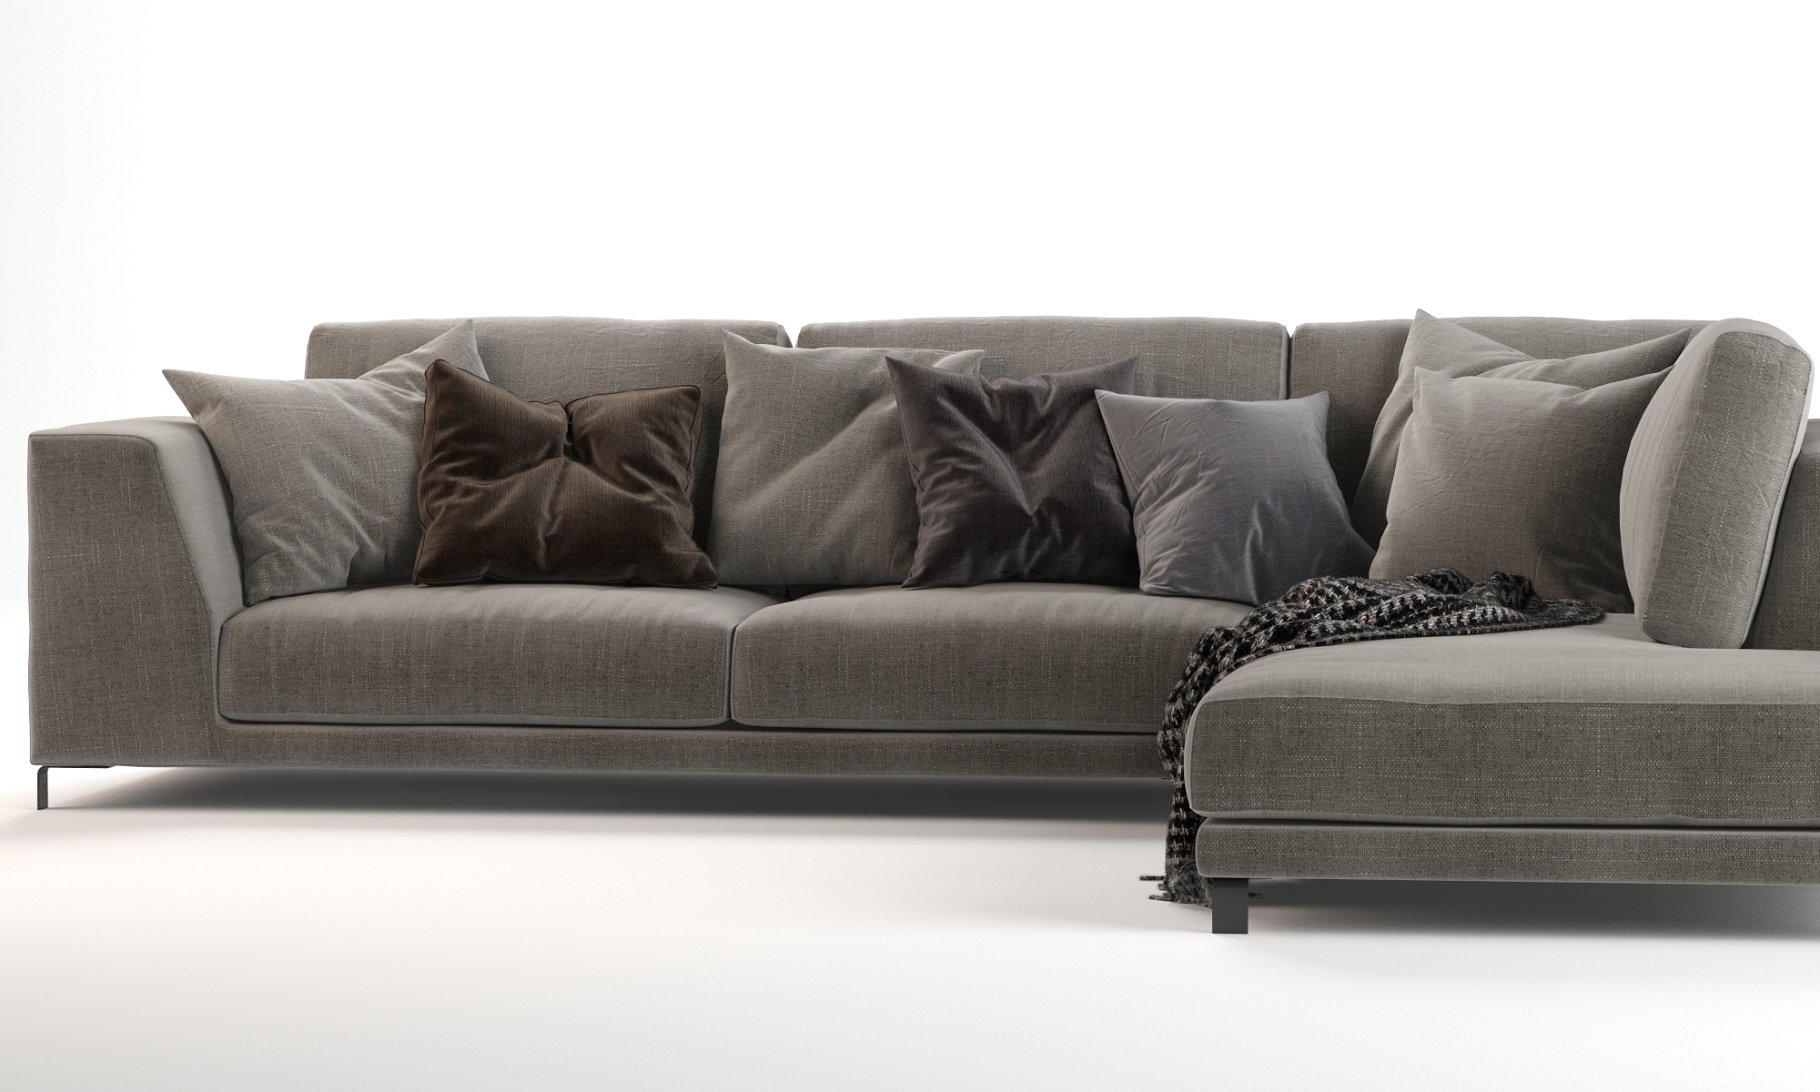 Rendering of amazing 3d model of a corner sofa